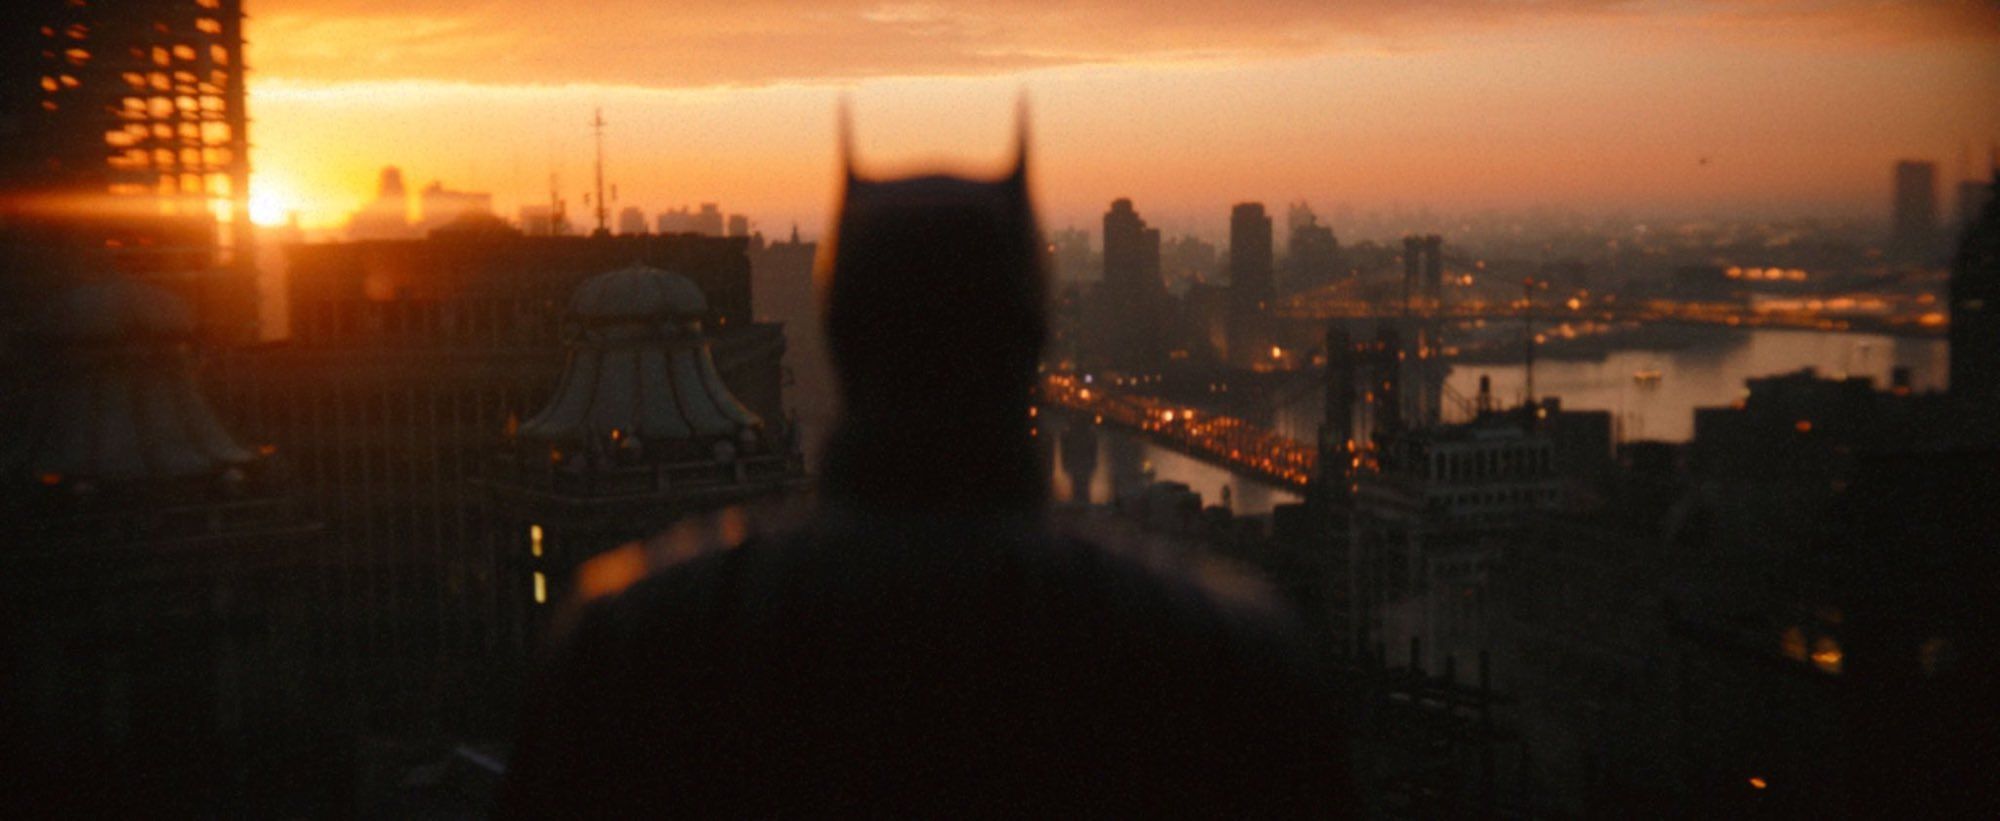 The Batman Trailer Still Full Size